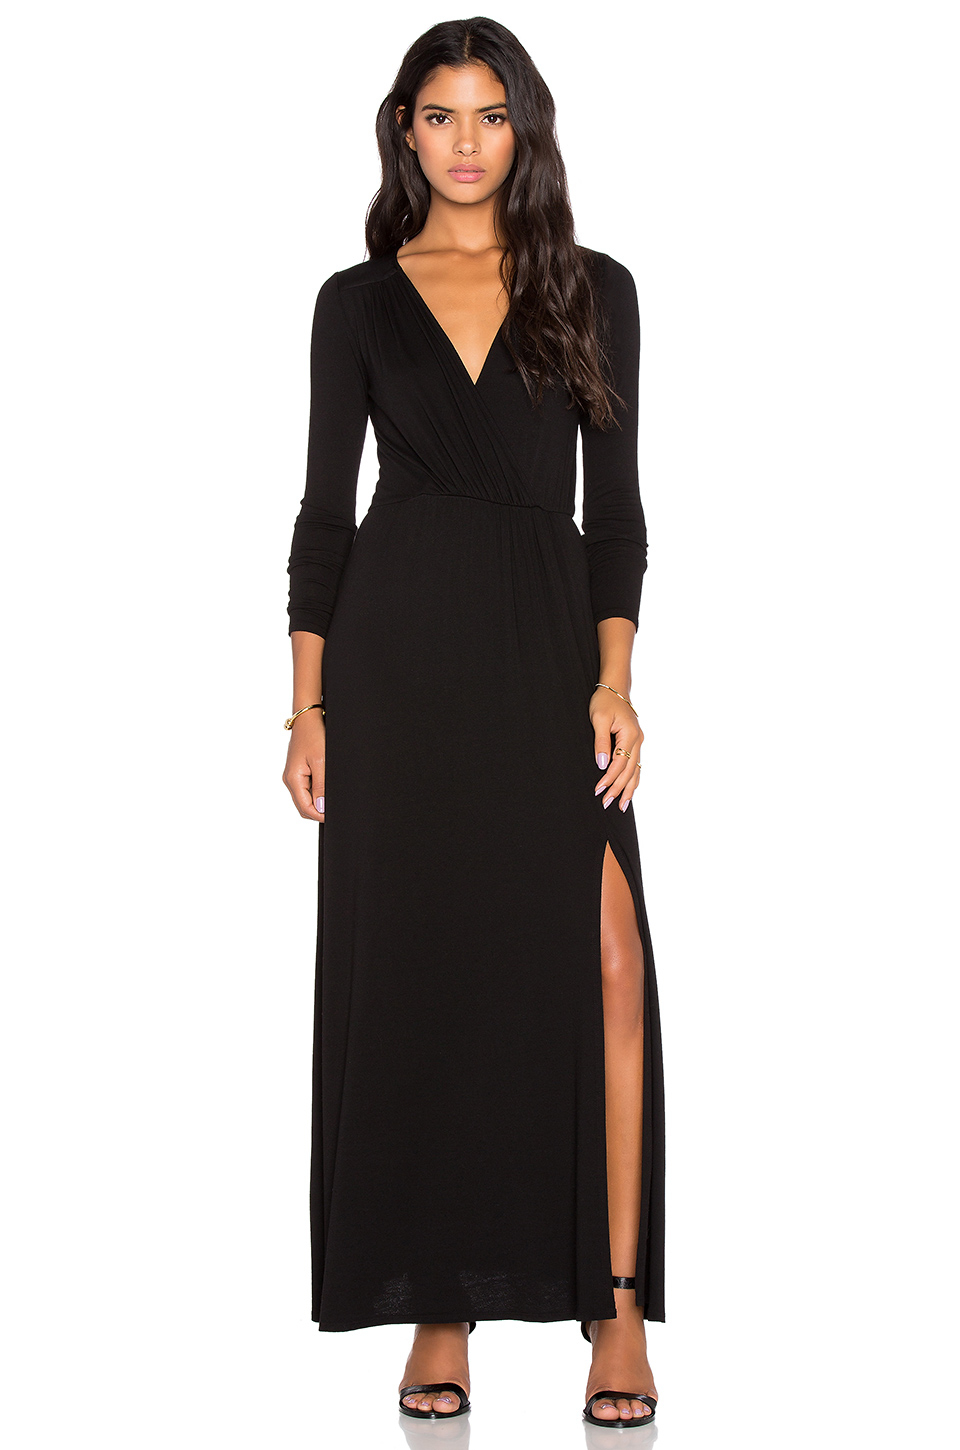 Lyst - Lamade Rayon Crepe Sapphire Surplice Maxi Dress in Black